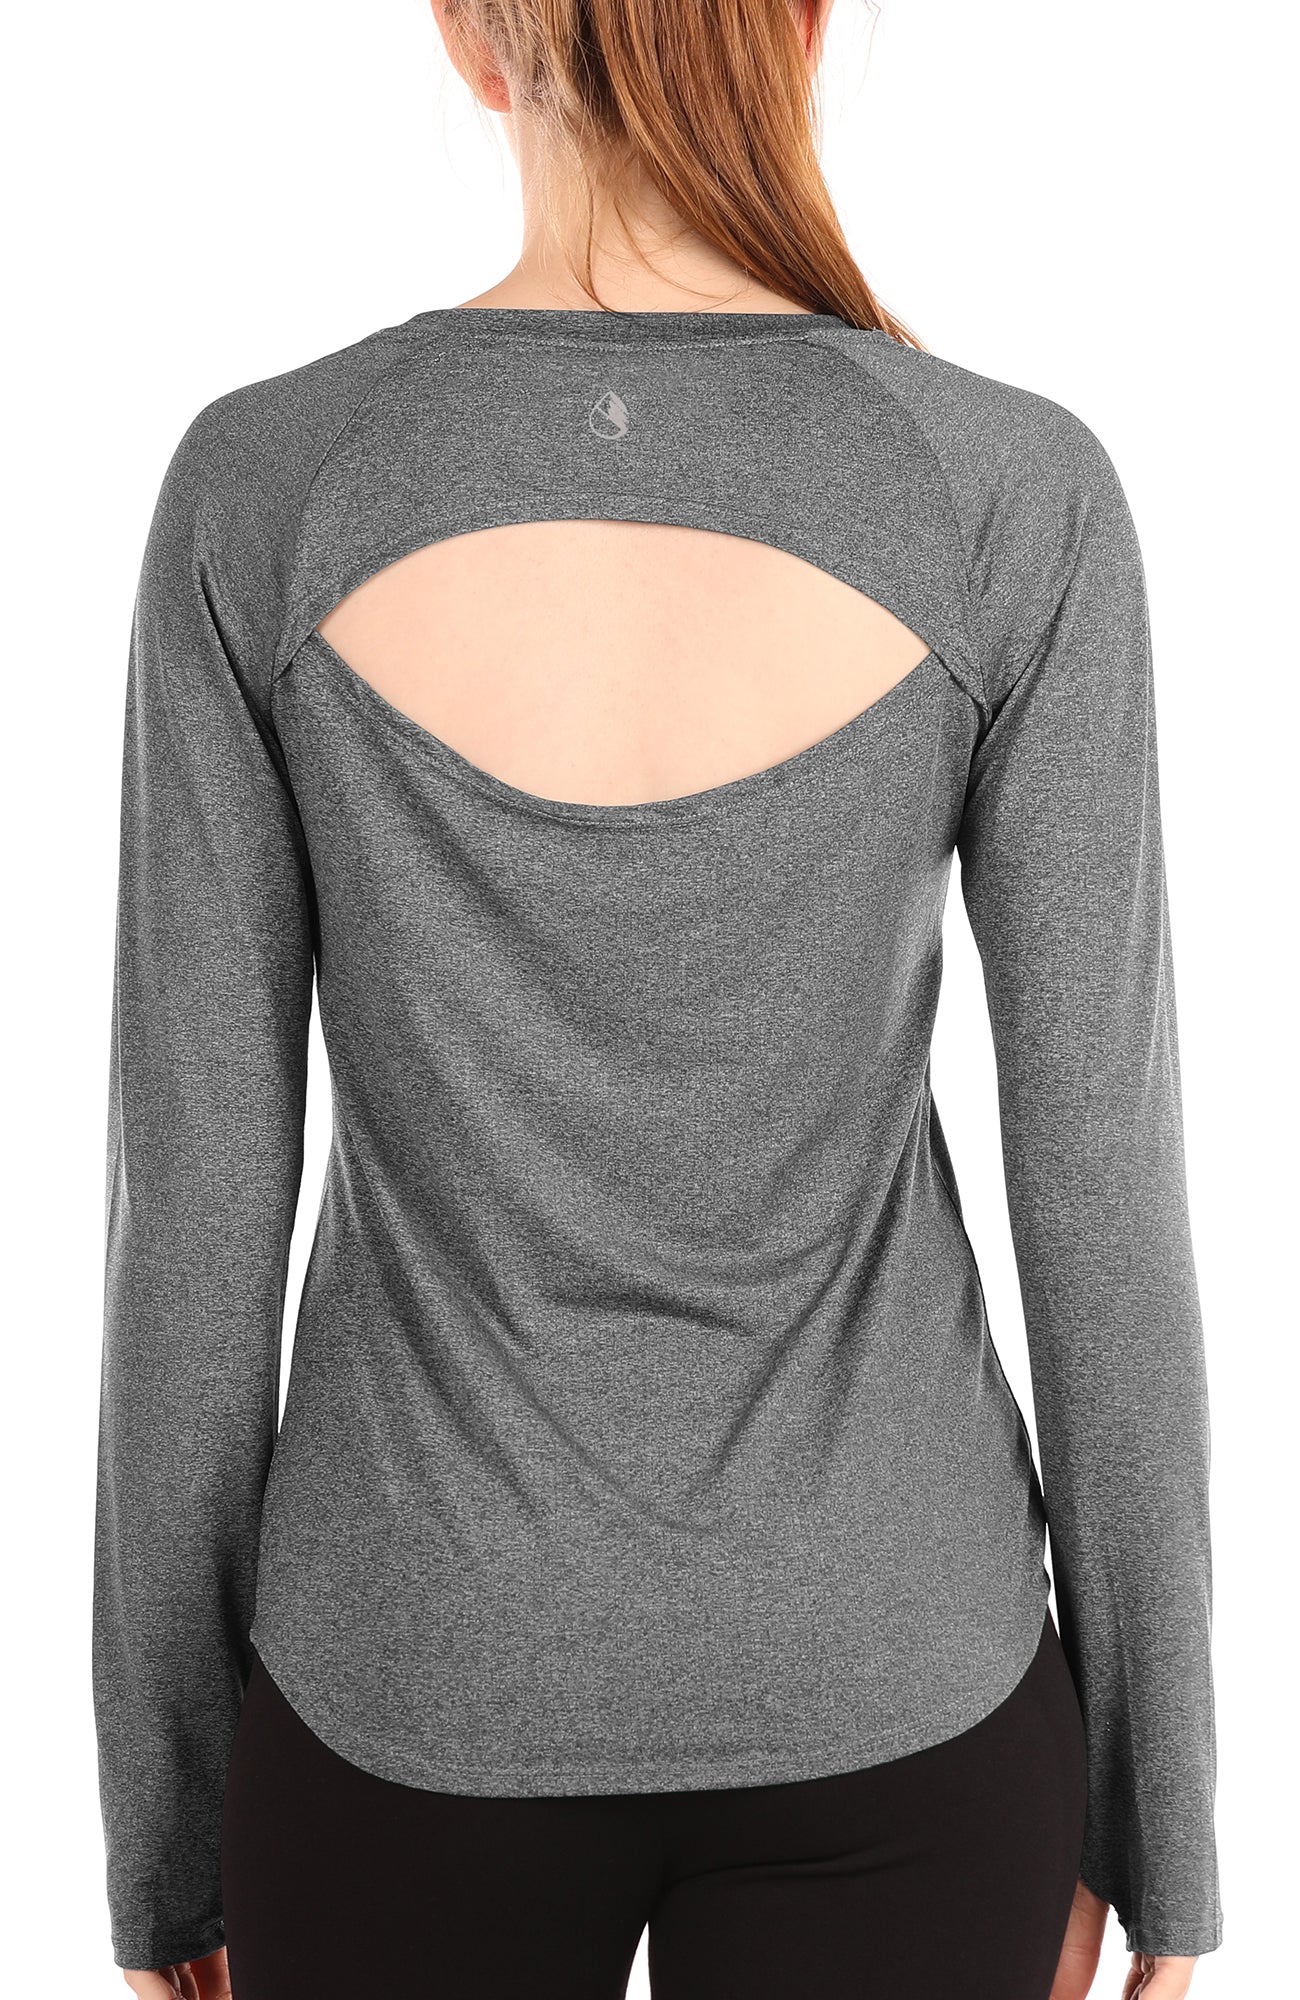 Women's Long Sleeve Workout Shirts & Tops